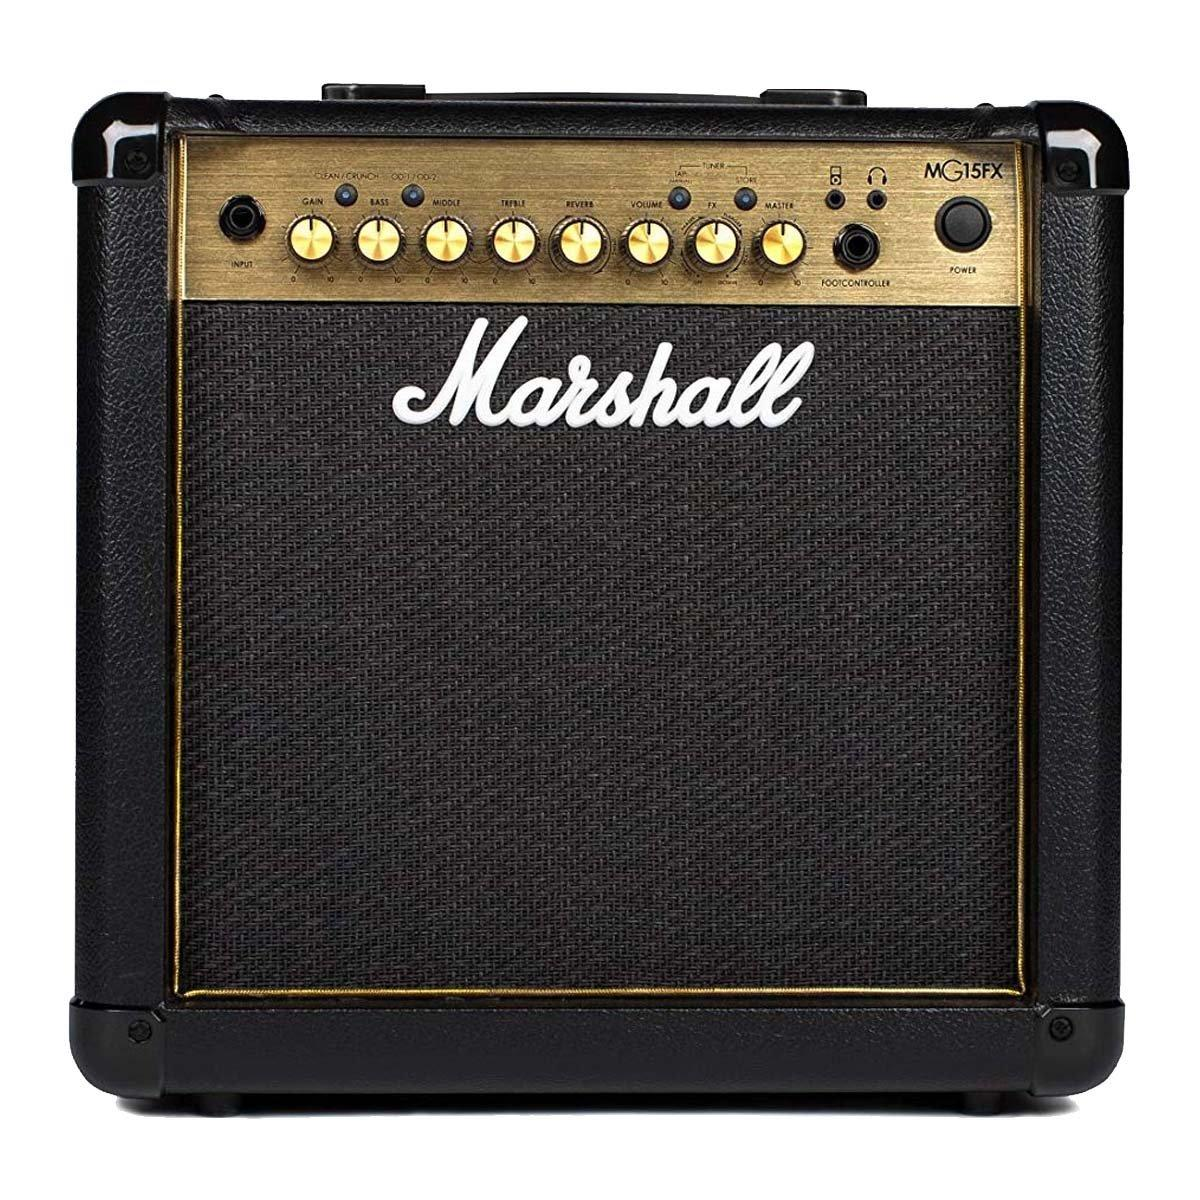 Amplificador MARSHALL Para Guitarra Eléctrica de 15W. Modelo: MG15GFX